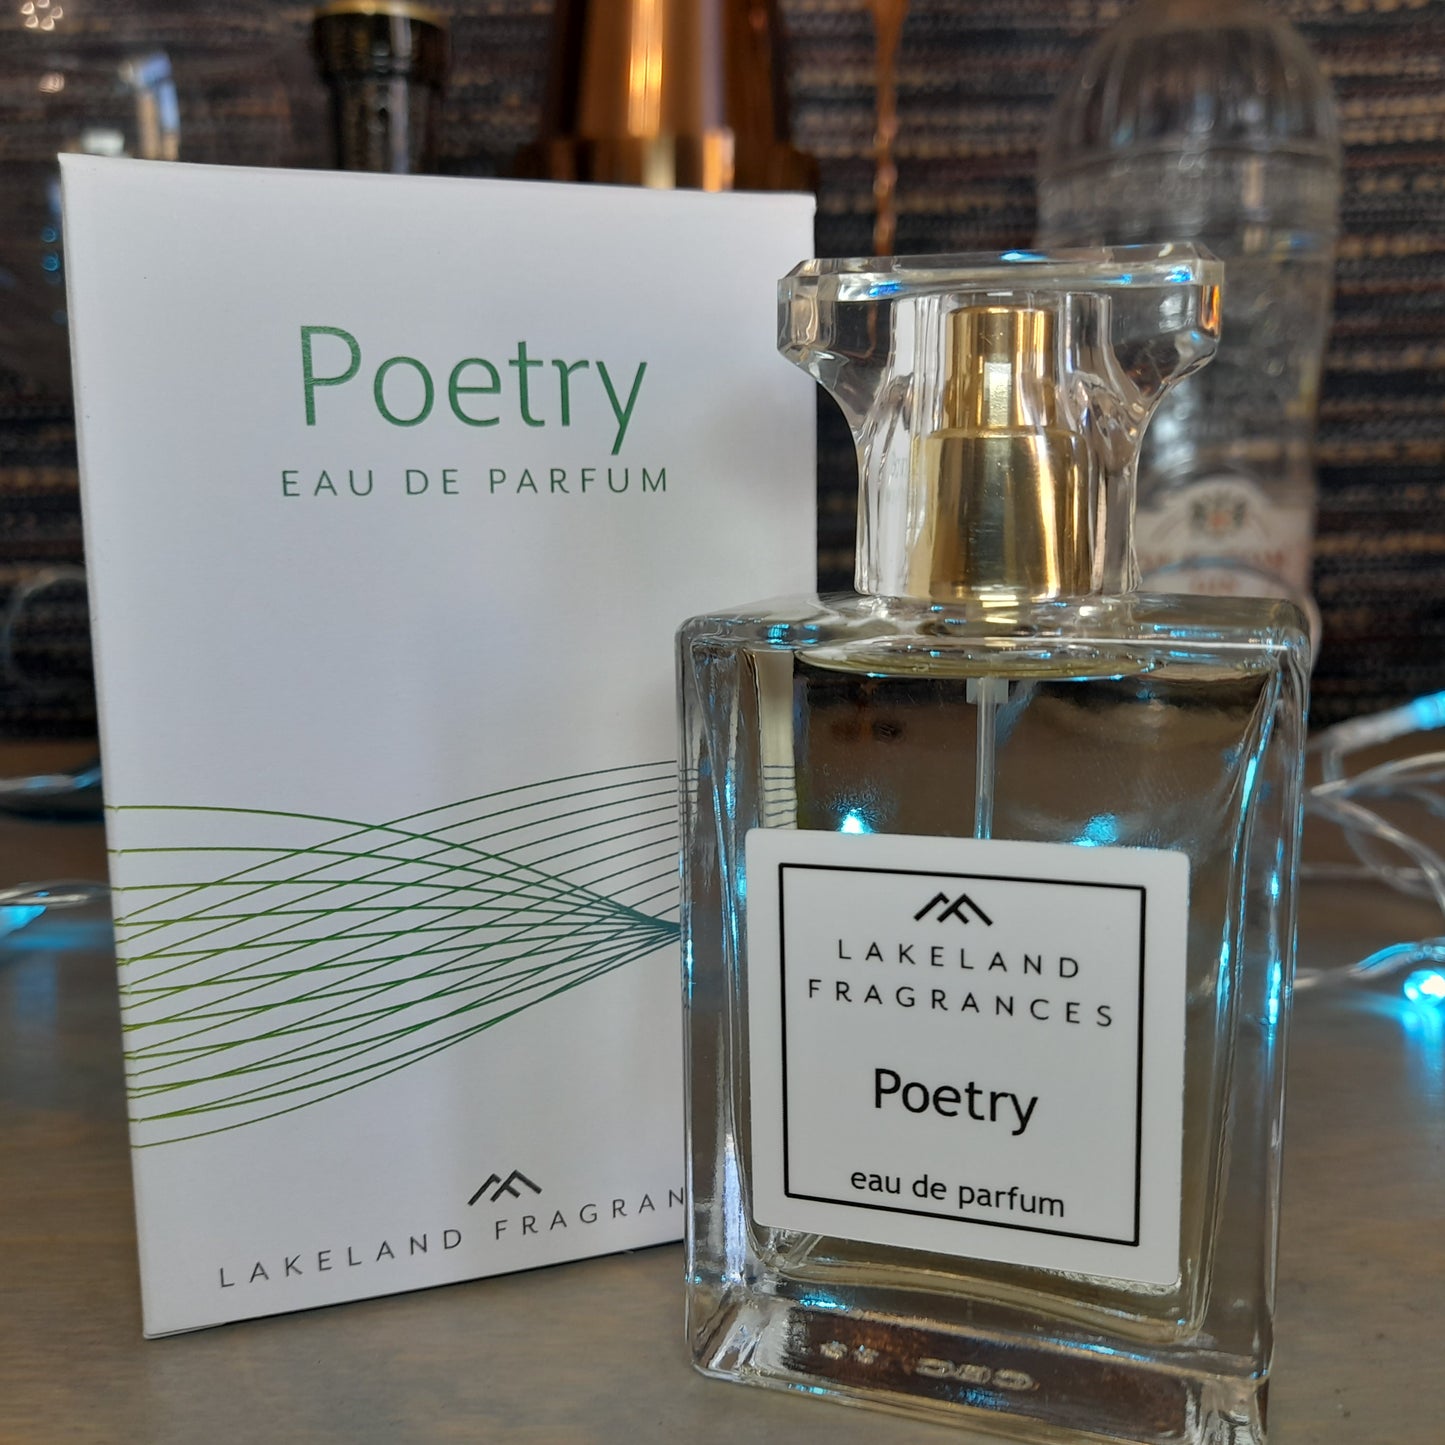 Poetry Eau de Parfum